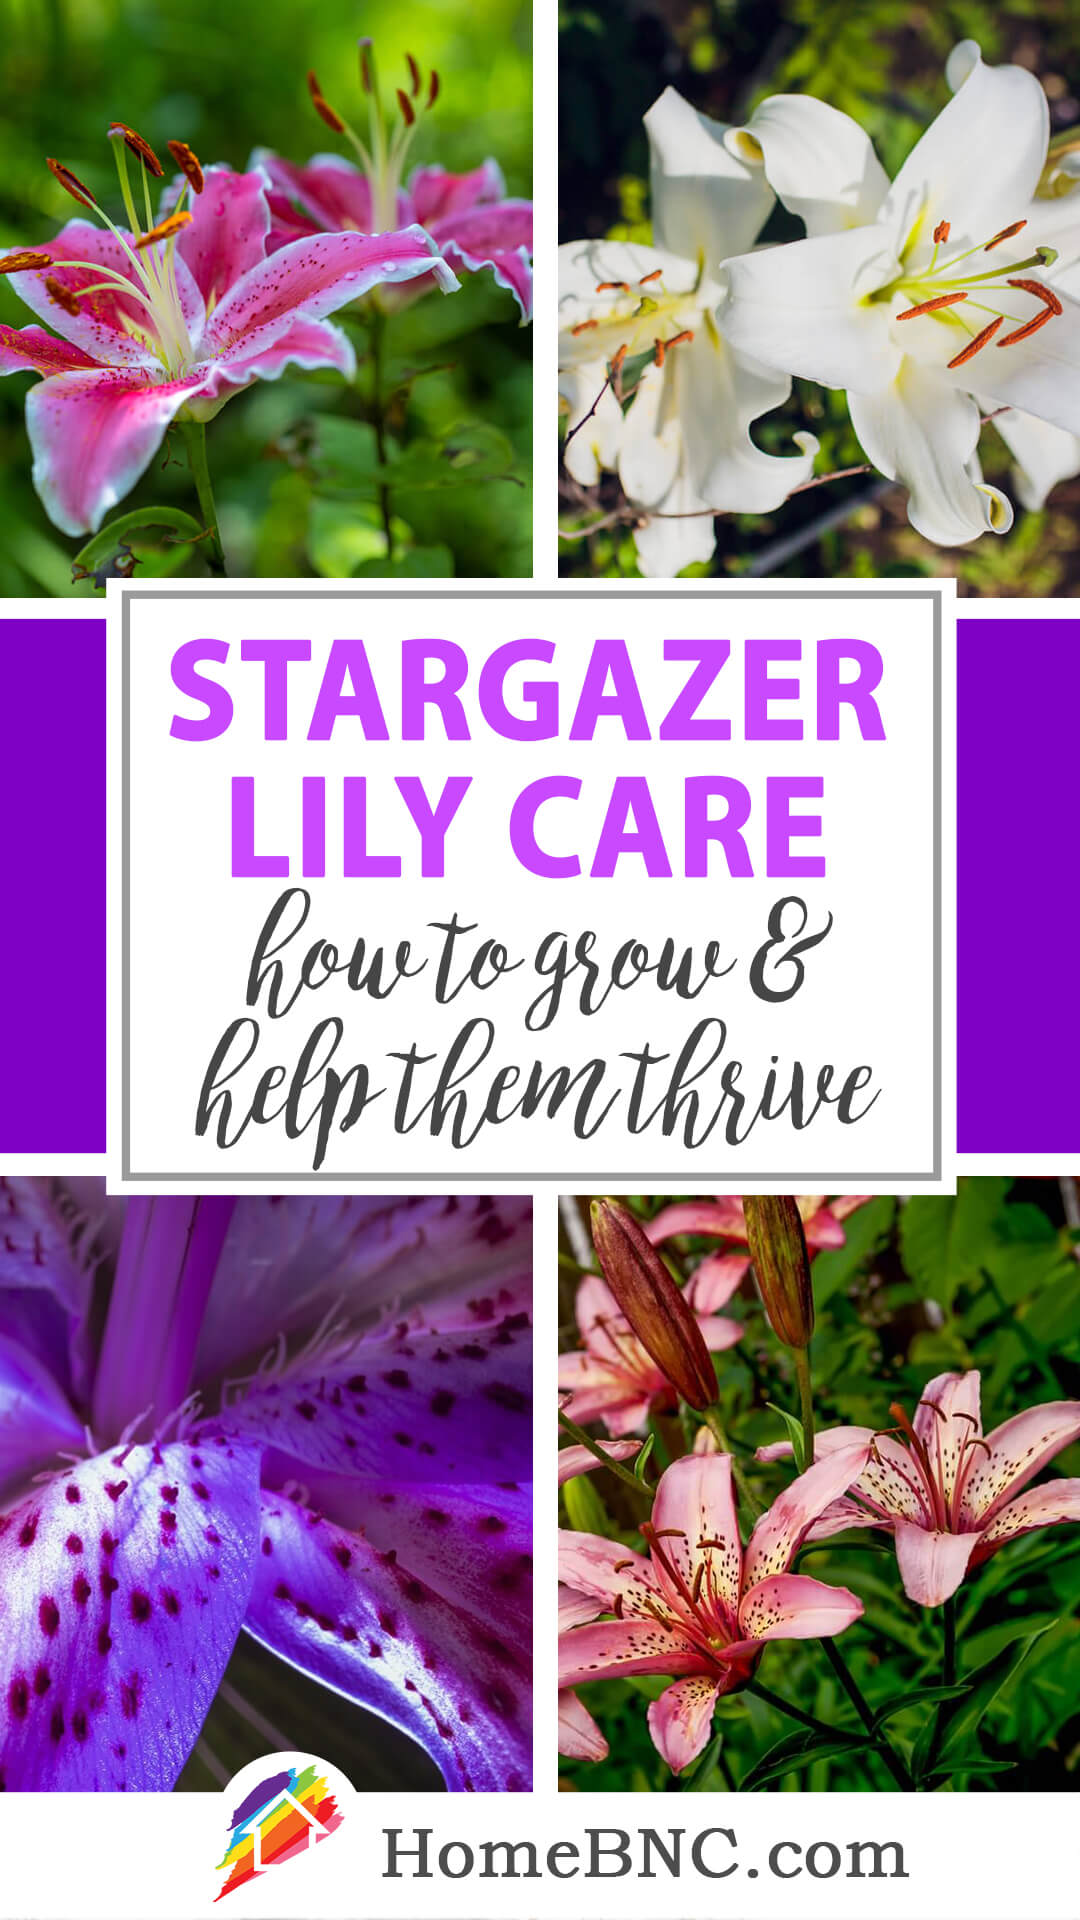 Stargazer lily care